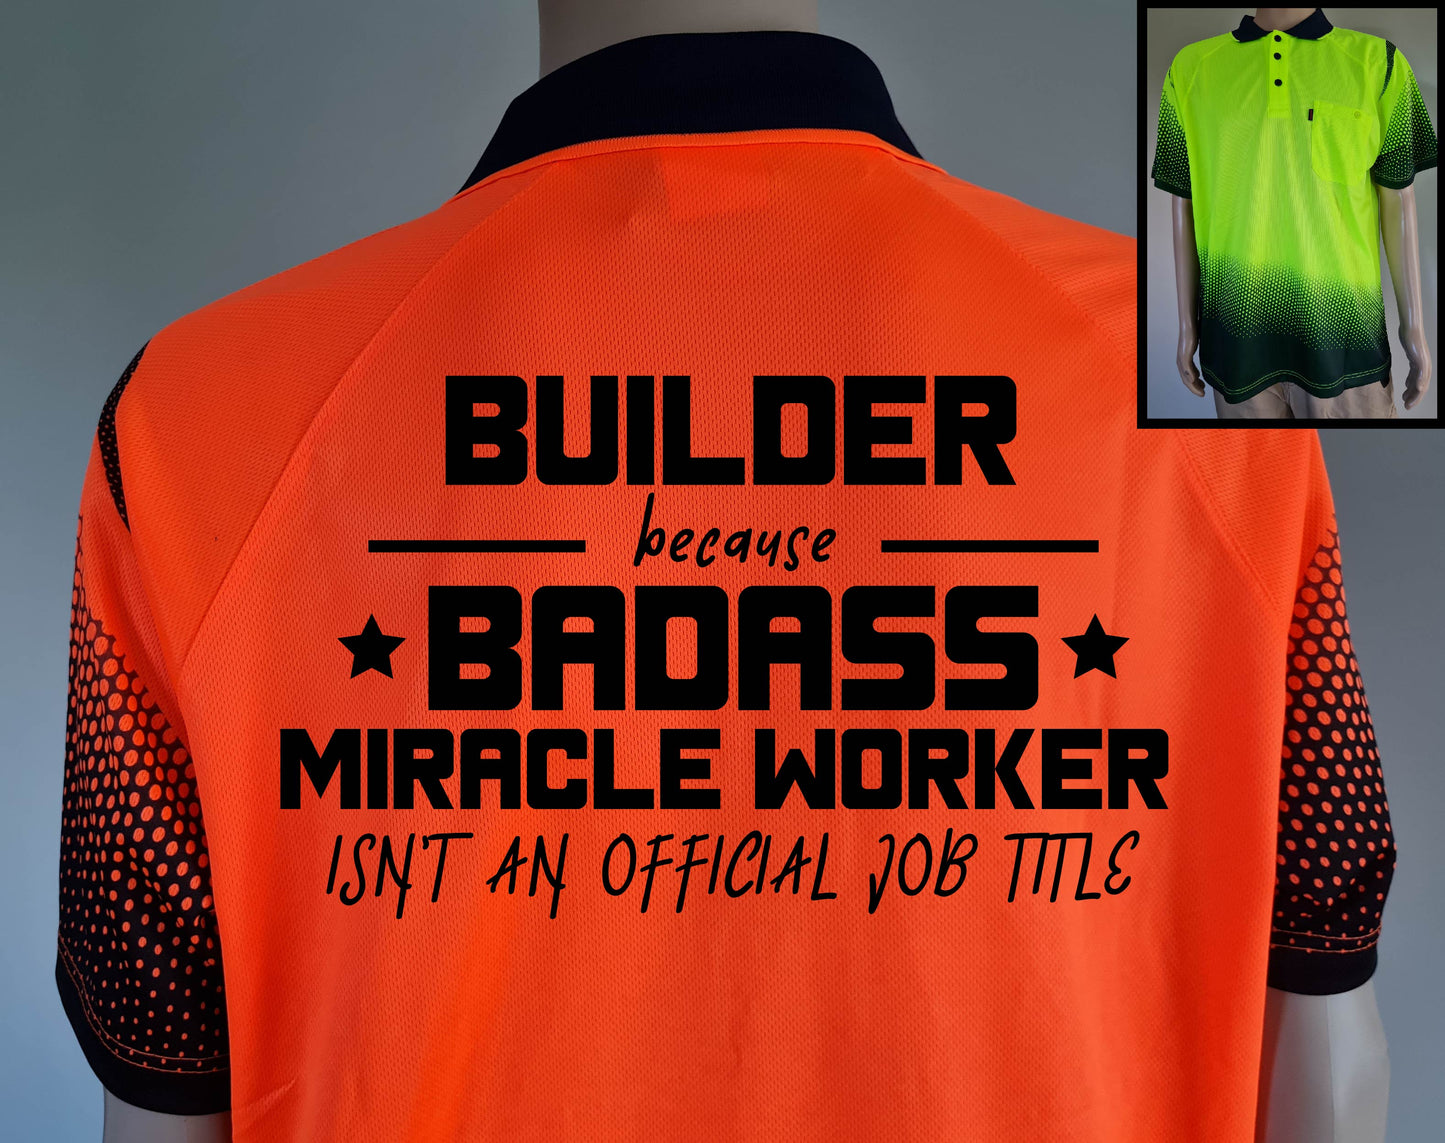 Badass Builder